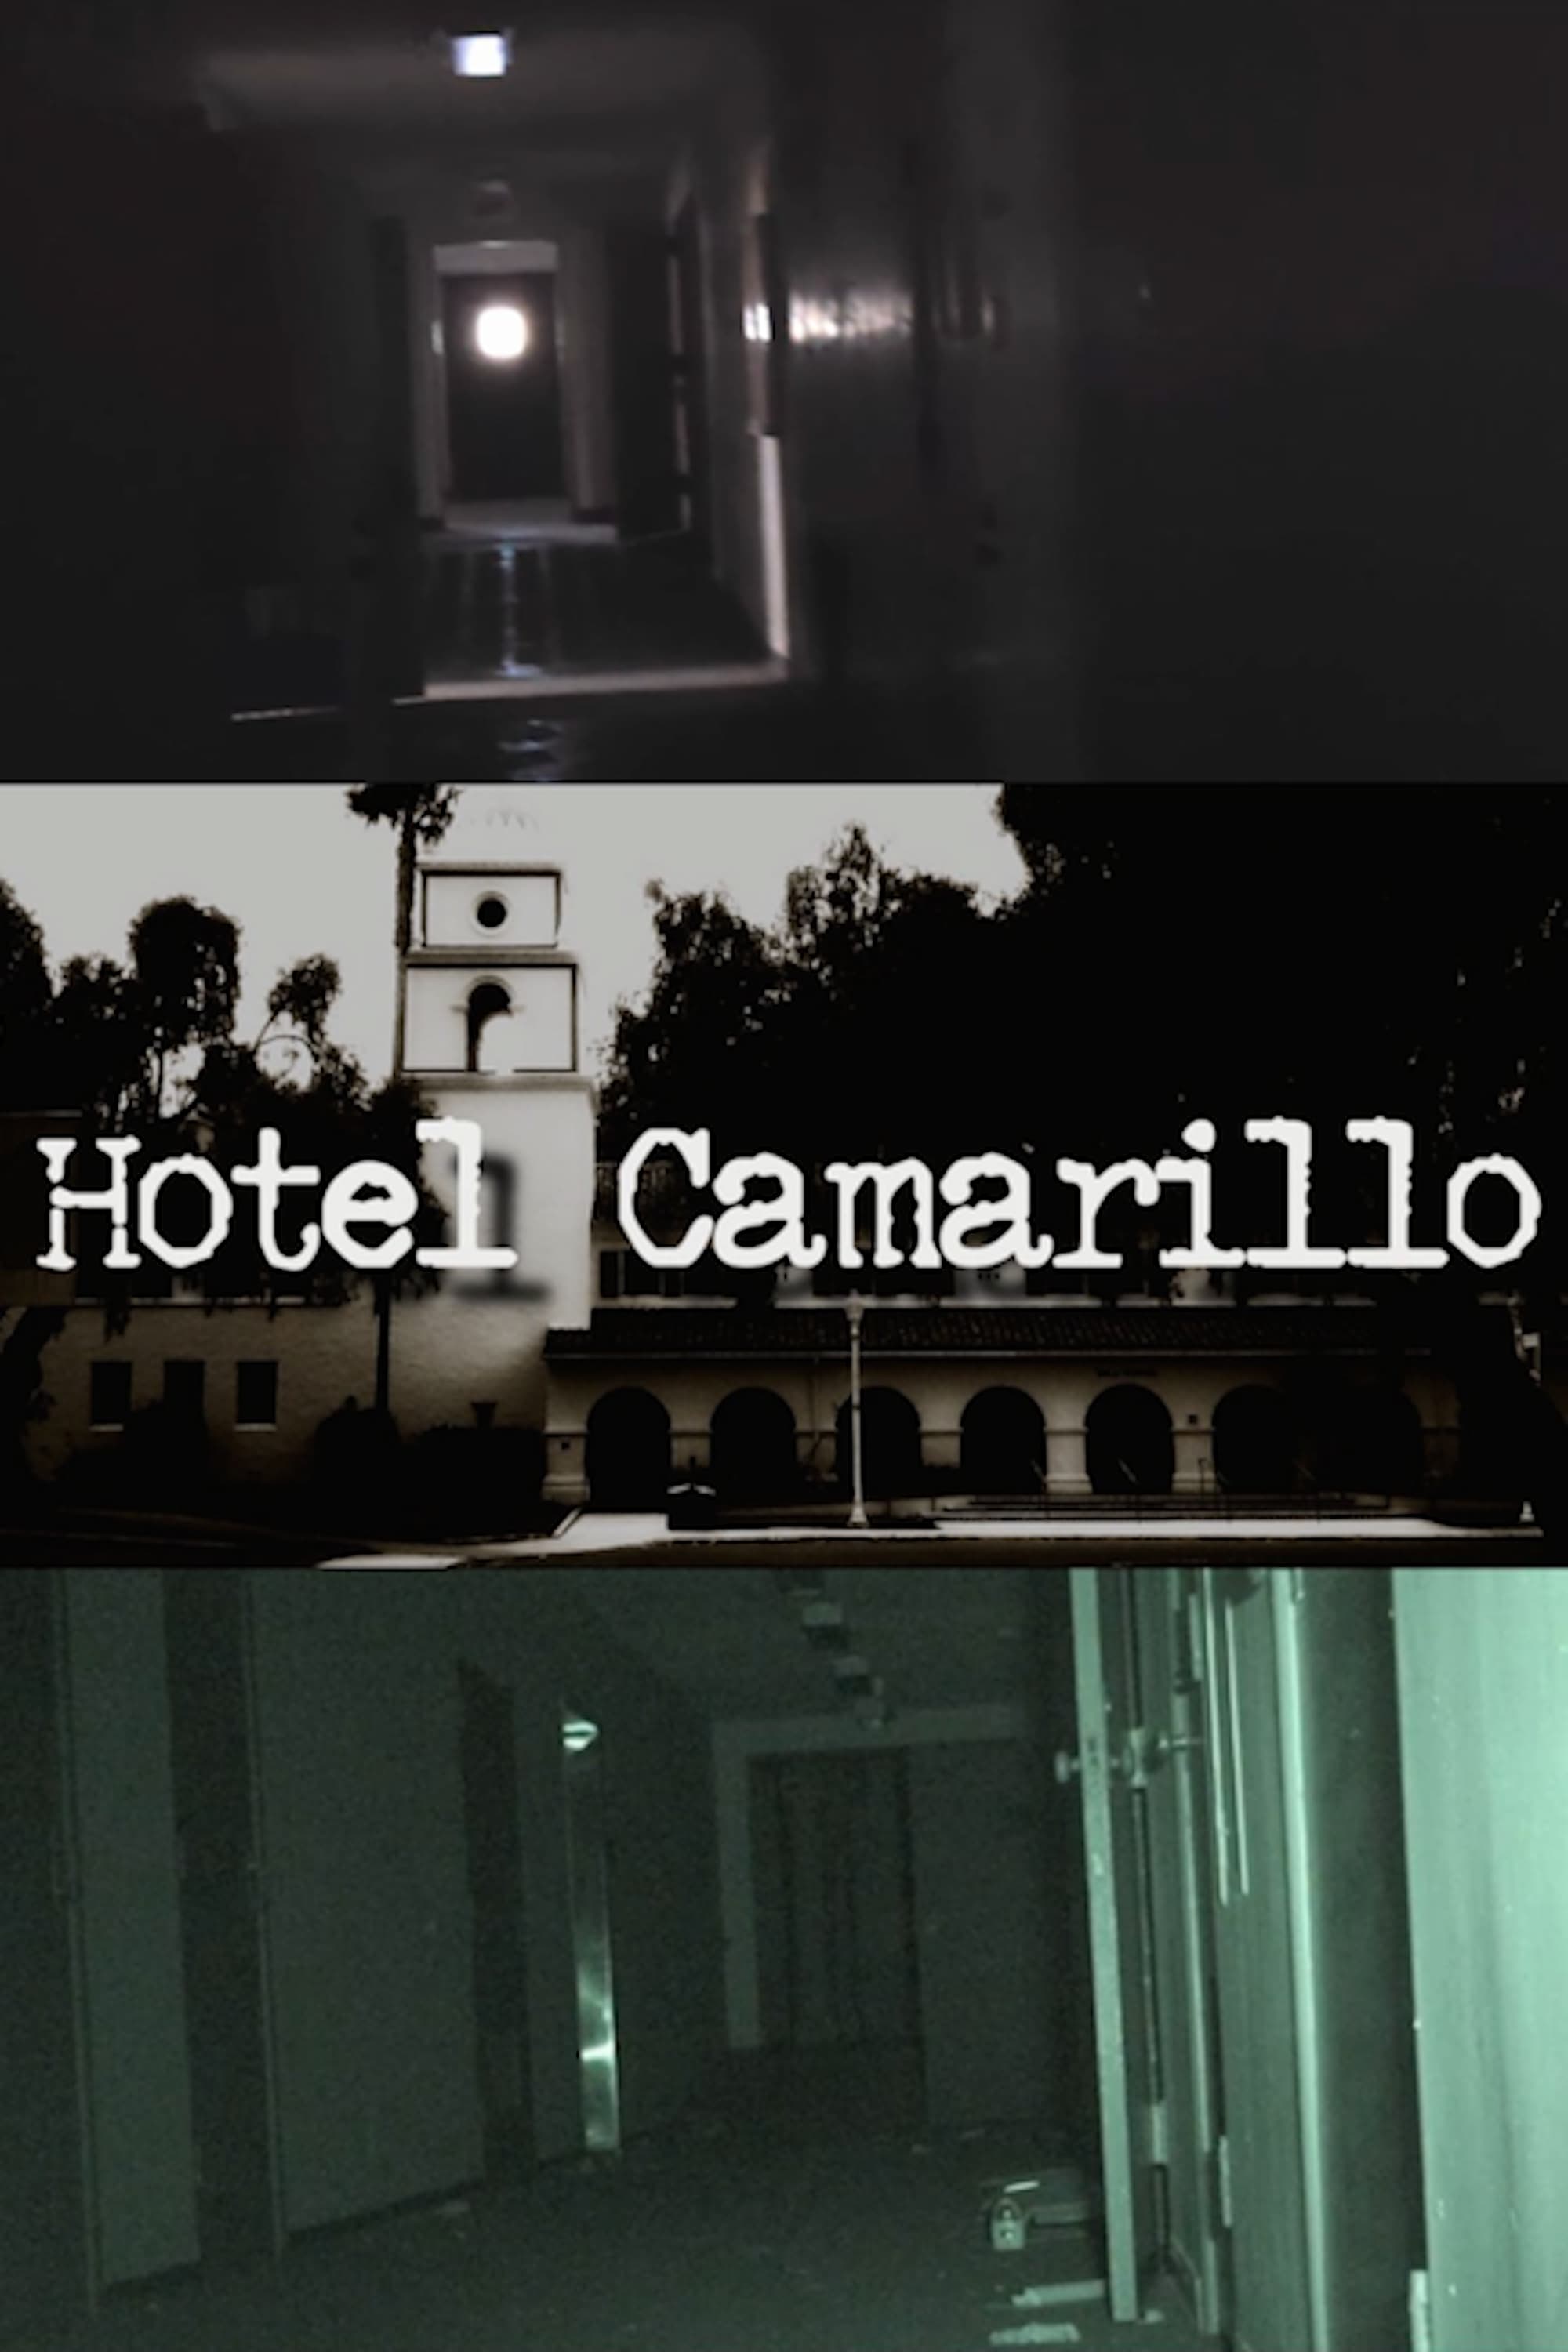 Hotel Camarillo on FREECABLE TV